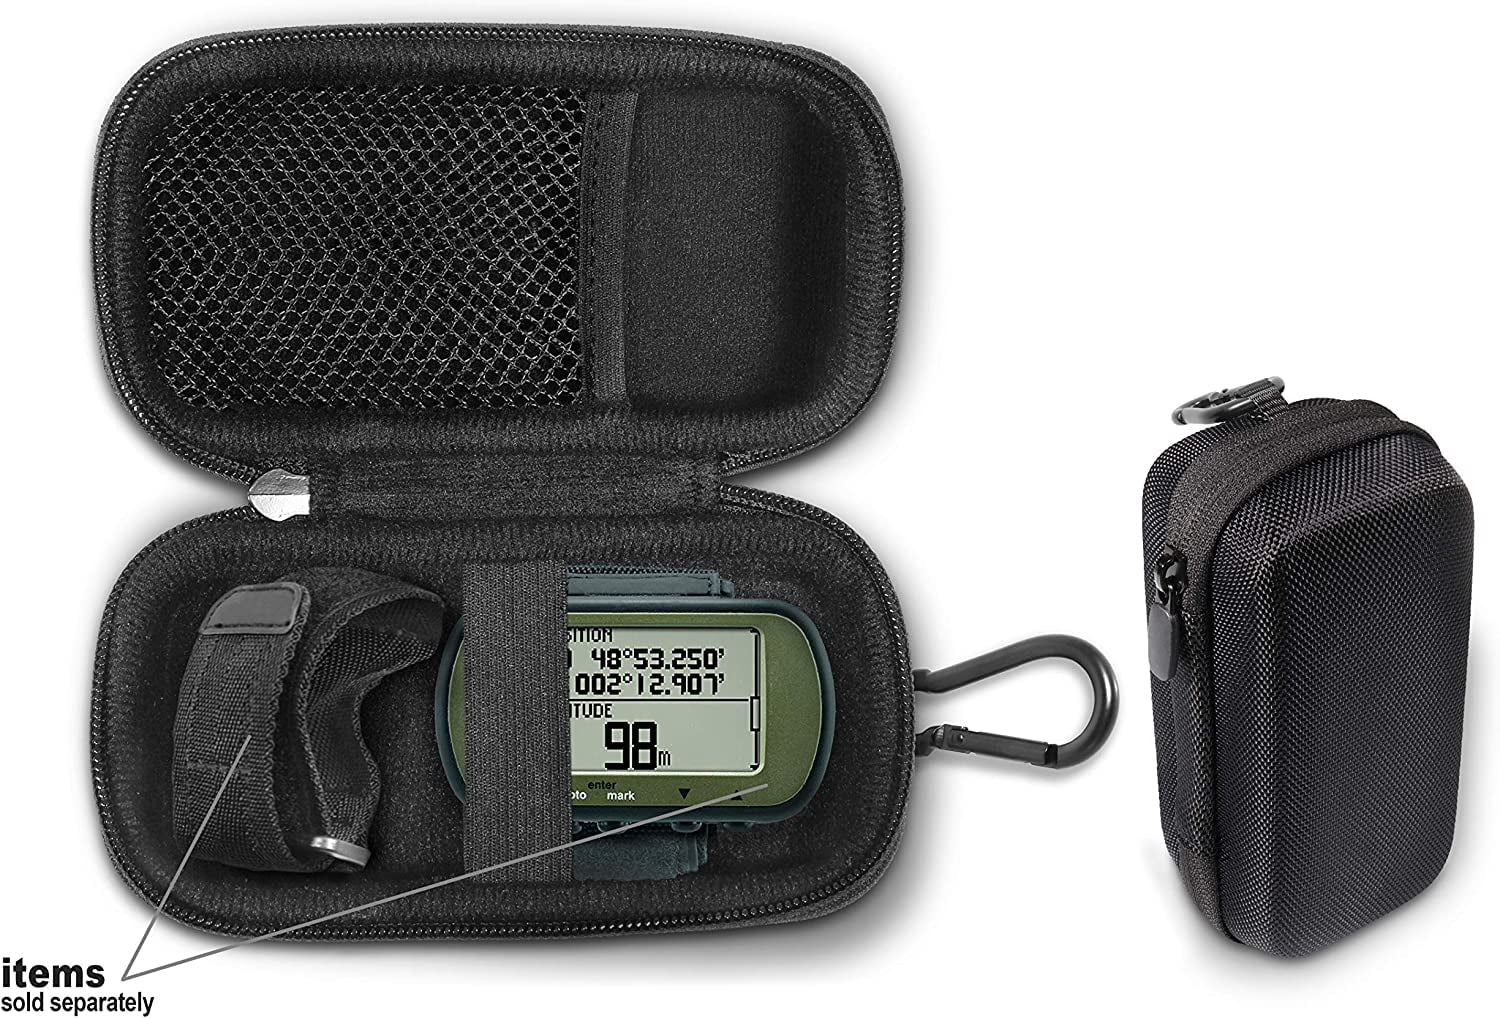 Hiking GPS Case Compatible with Foretrex 401, 301, 201, 601, 701 GPS, Wrist-Mounted Navigator, - Walmart.com